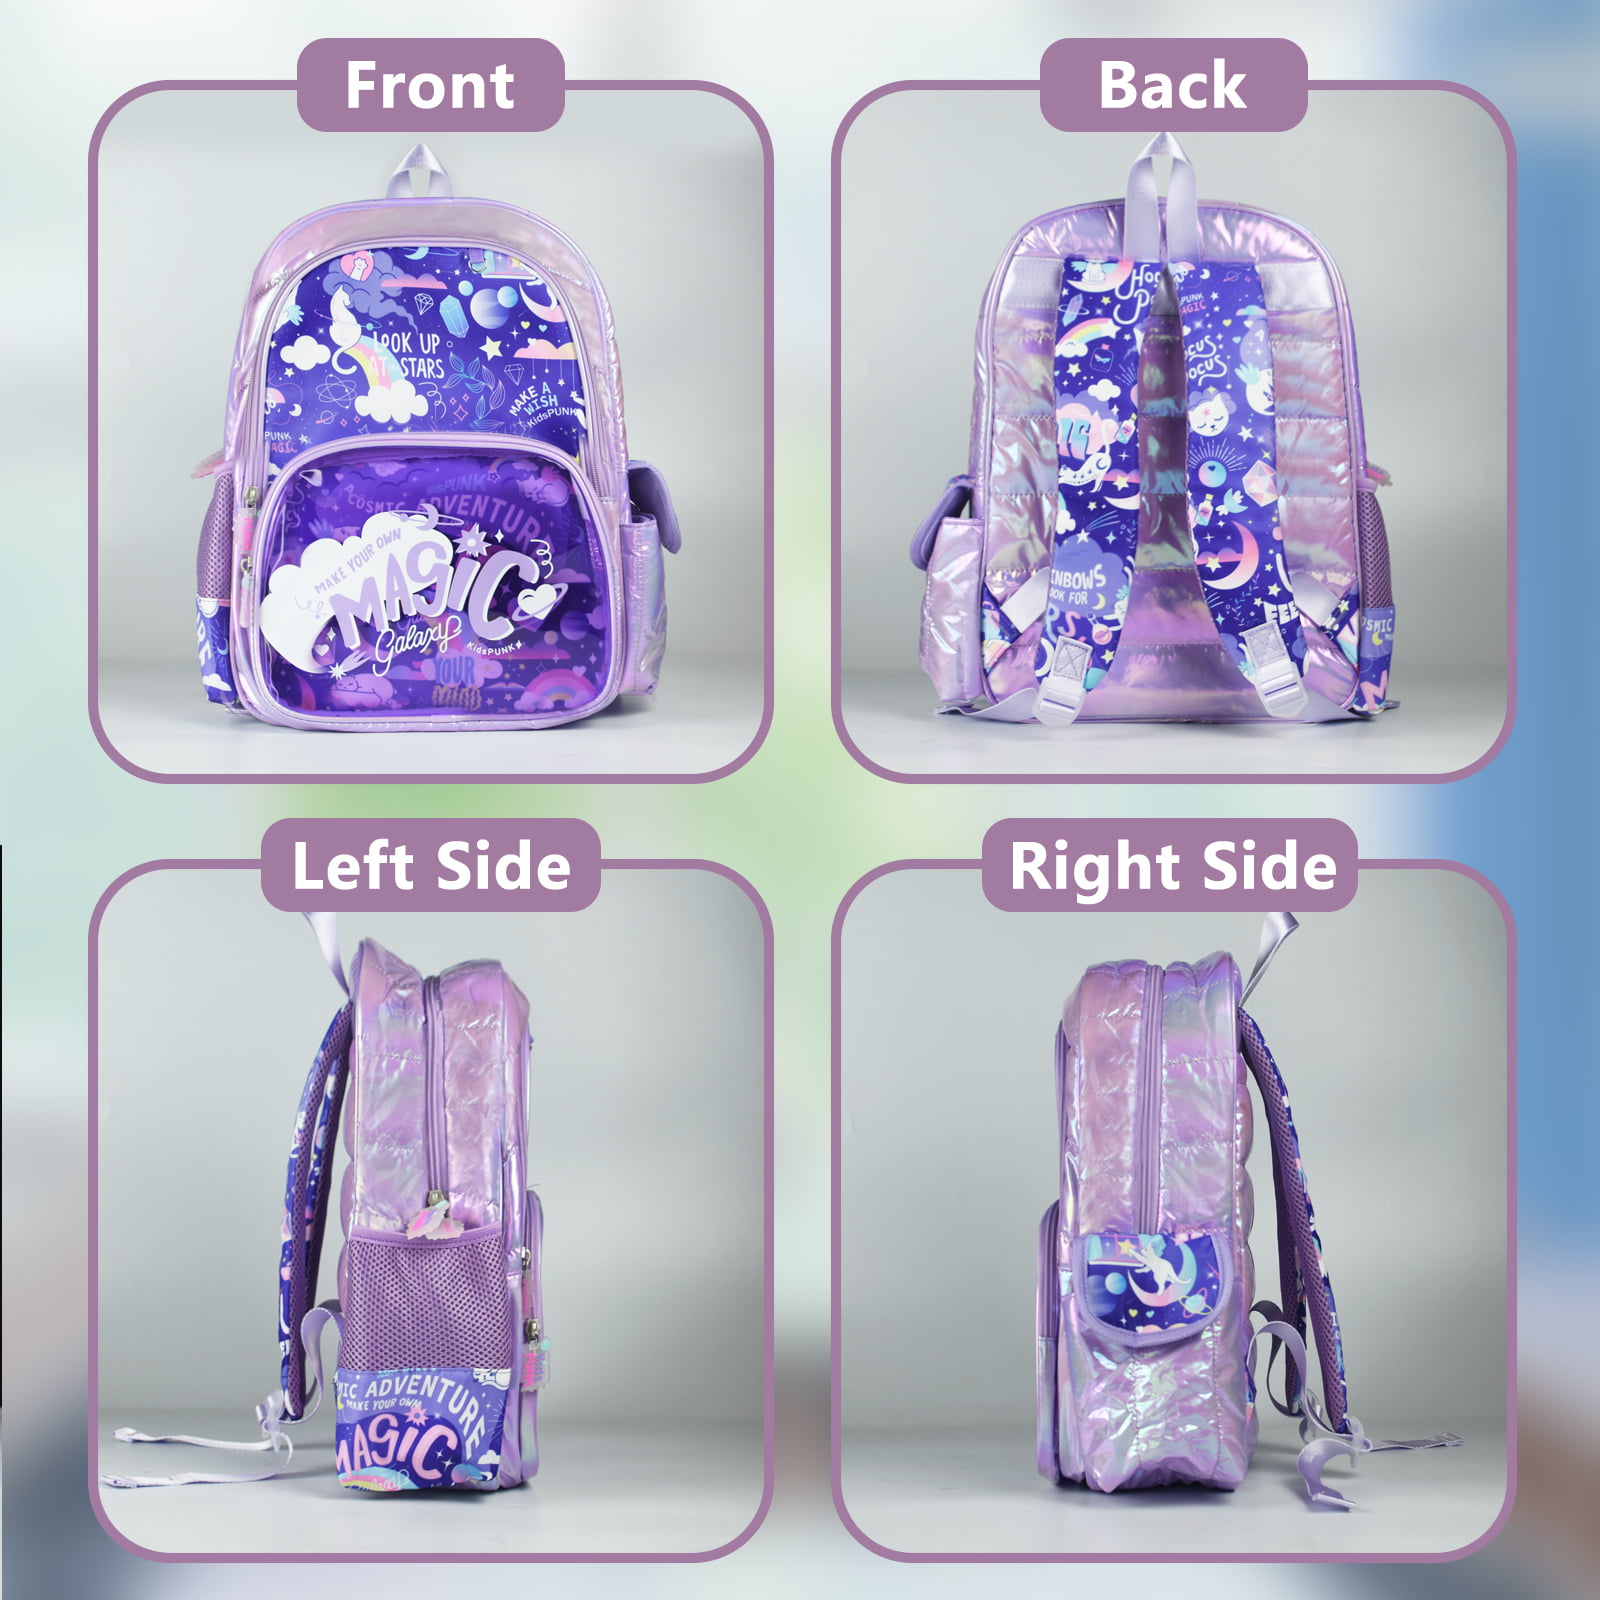 Kids' 16.8 Unicorn Pocket Backpack - Cat & Jack™ White/Purple